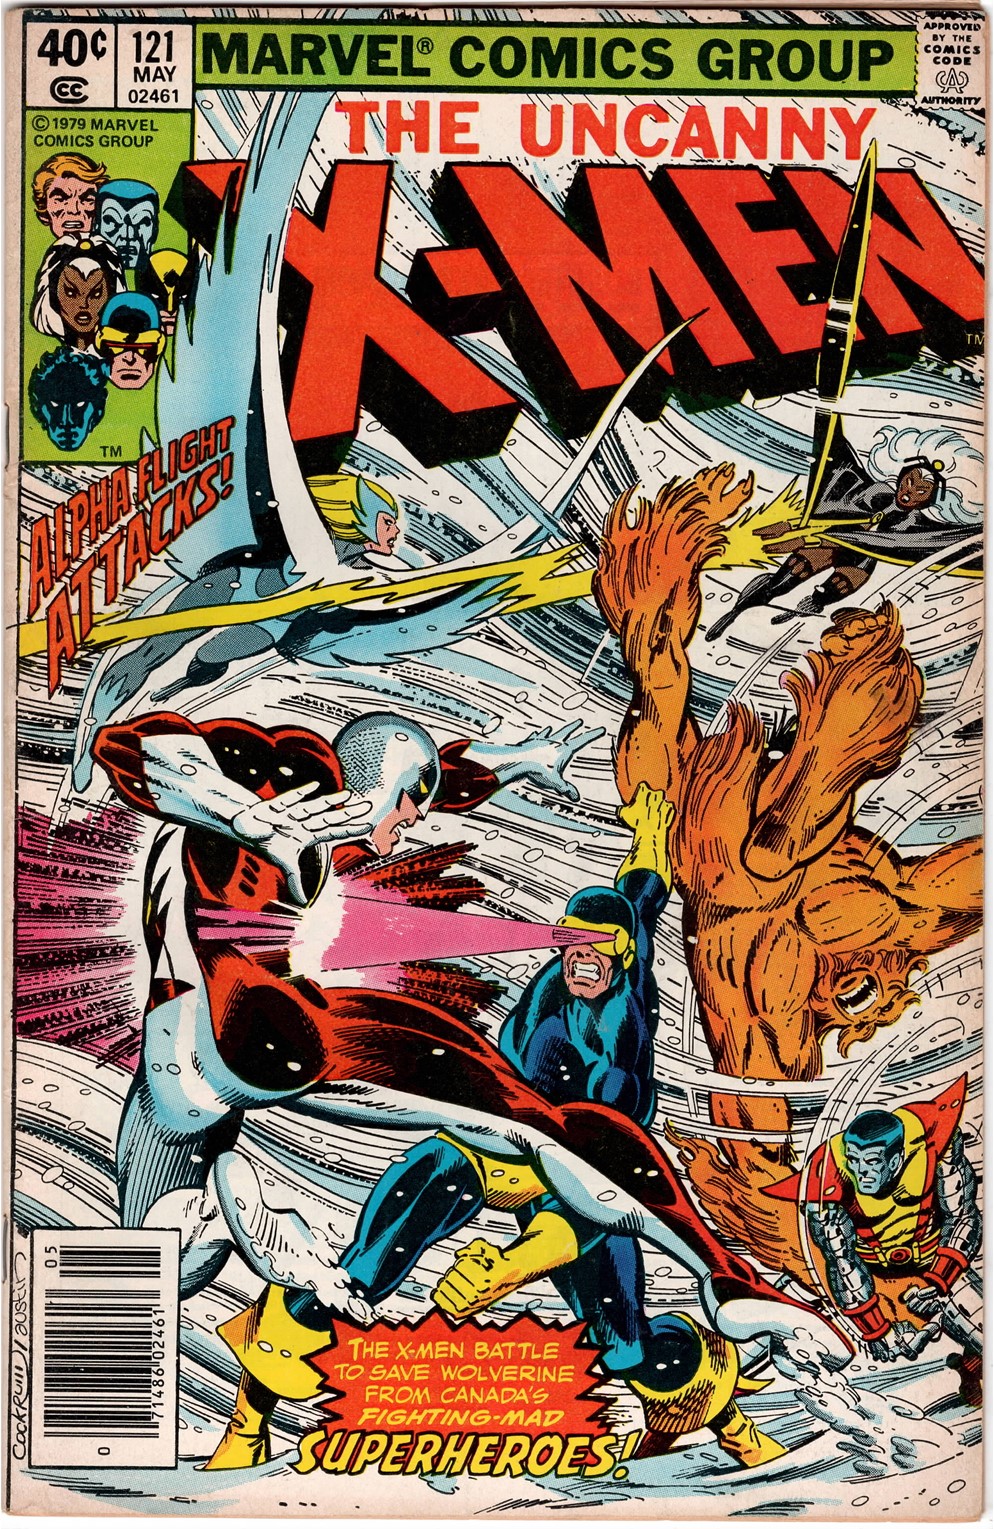 Uncanny X-Men #121